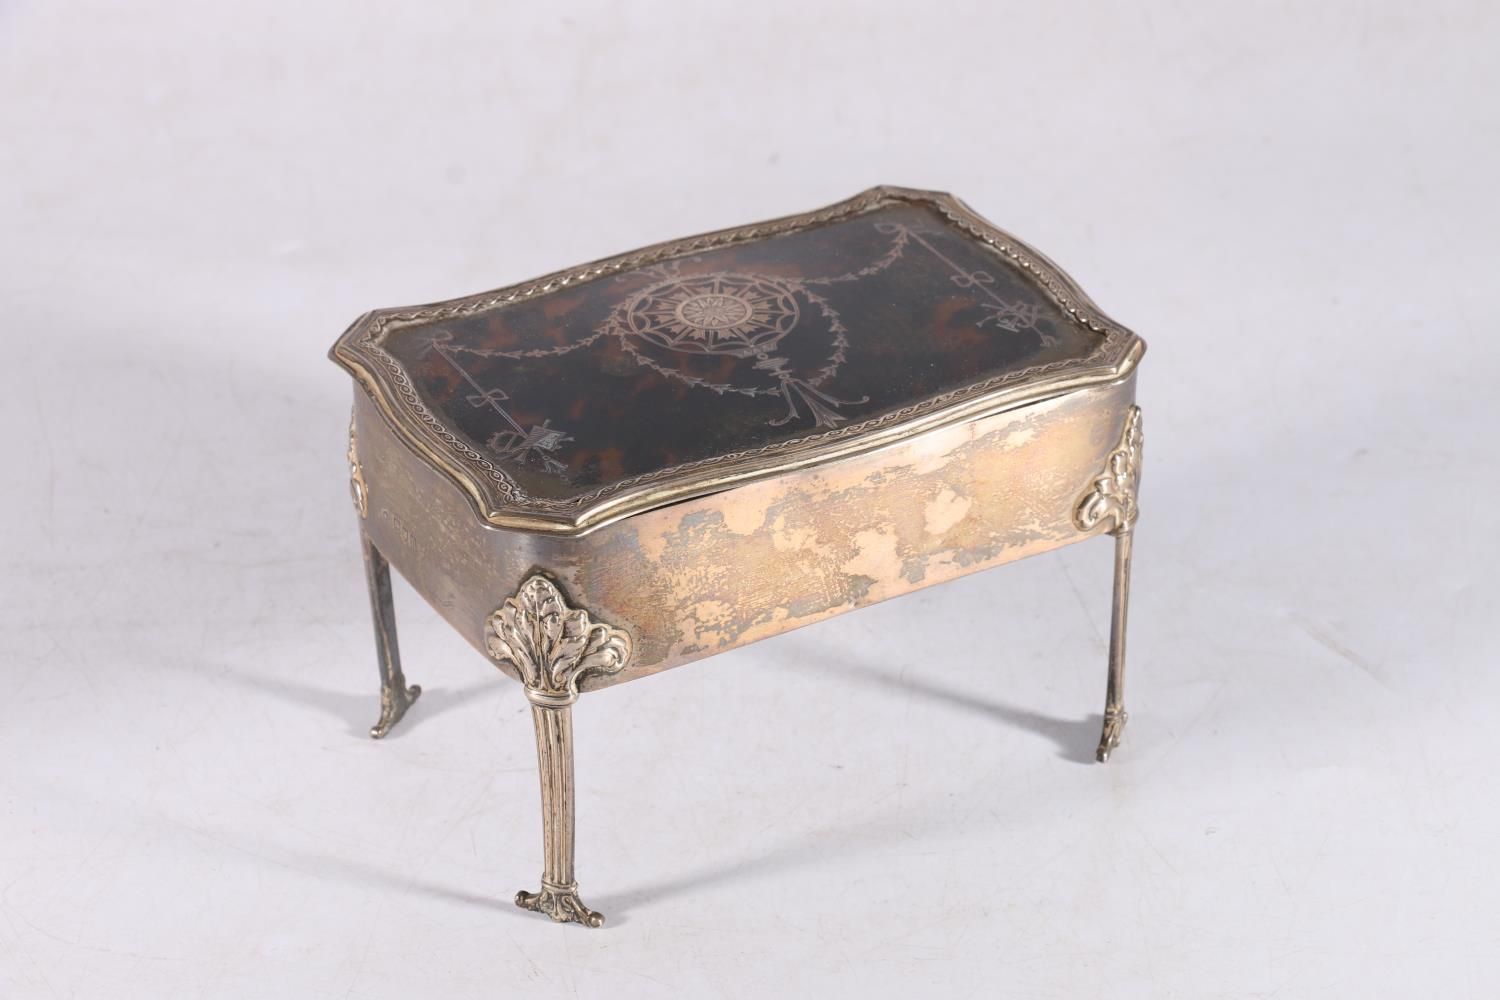 EDINBURGH: The Antique Auction of Silver, Jewellery, Paintings, Oriental & Asian, Porcelain, Furniture, Clocks, etc.